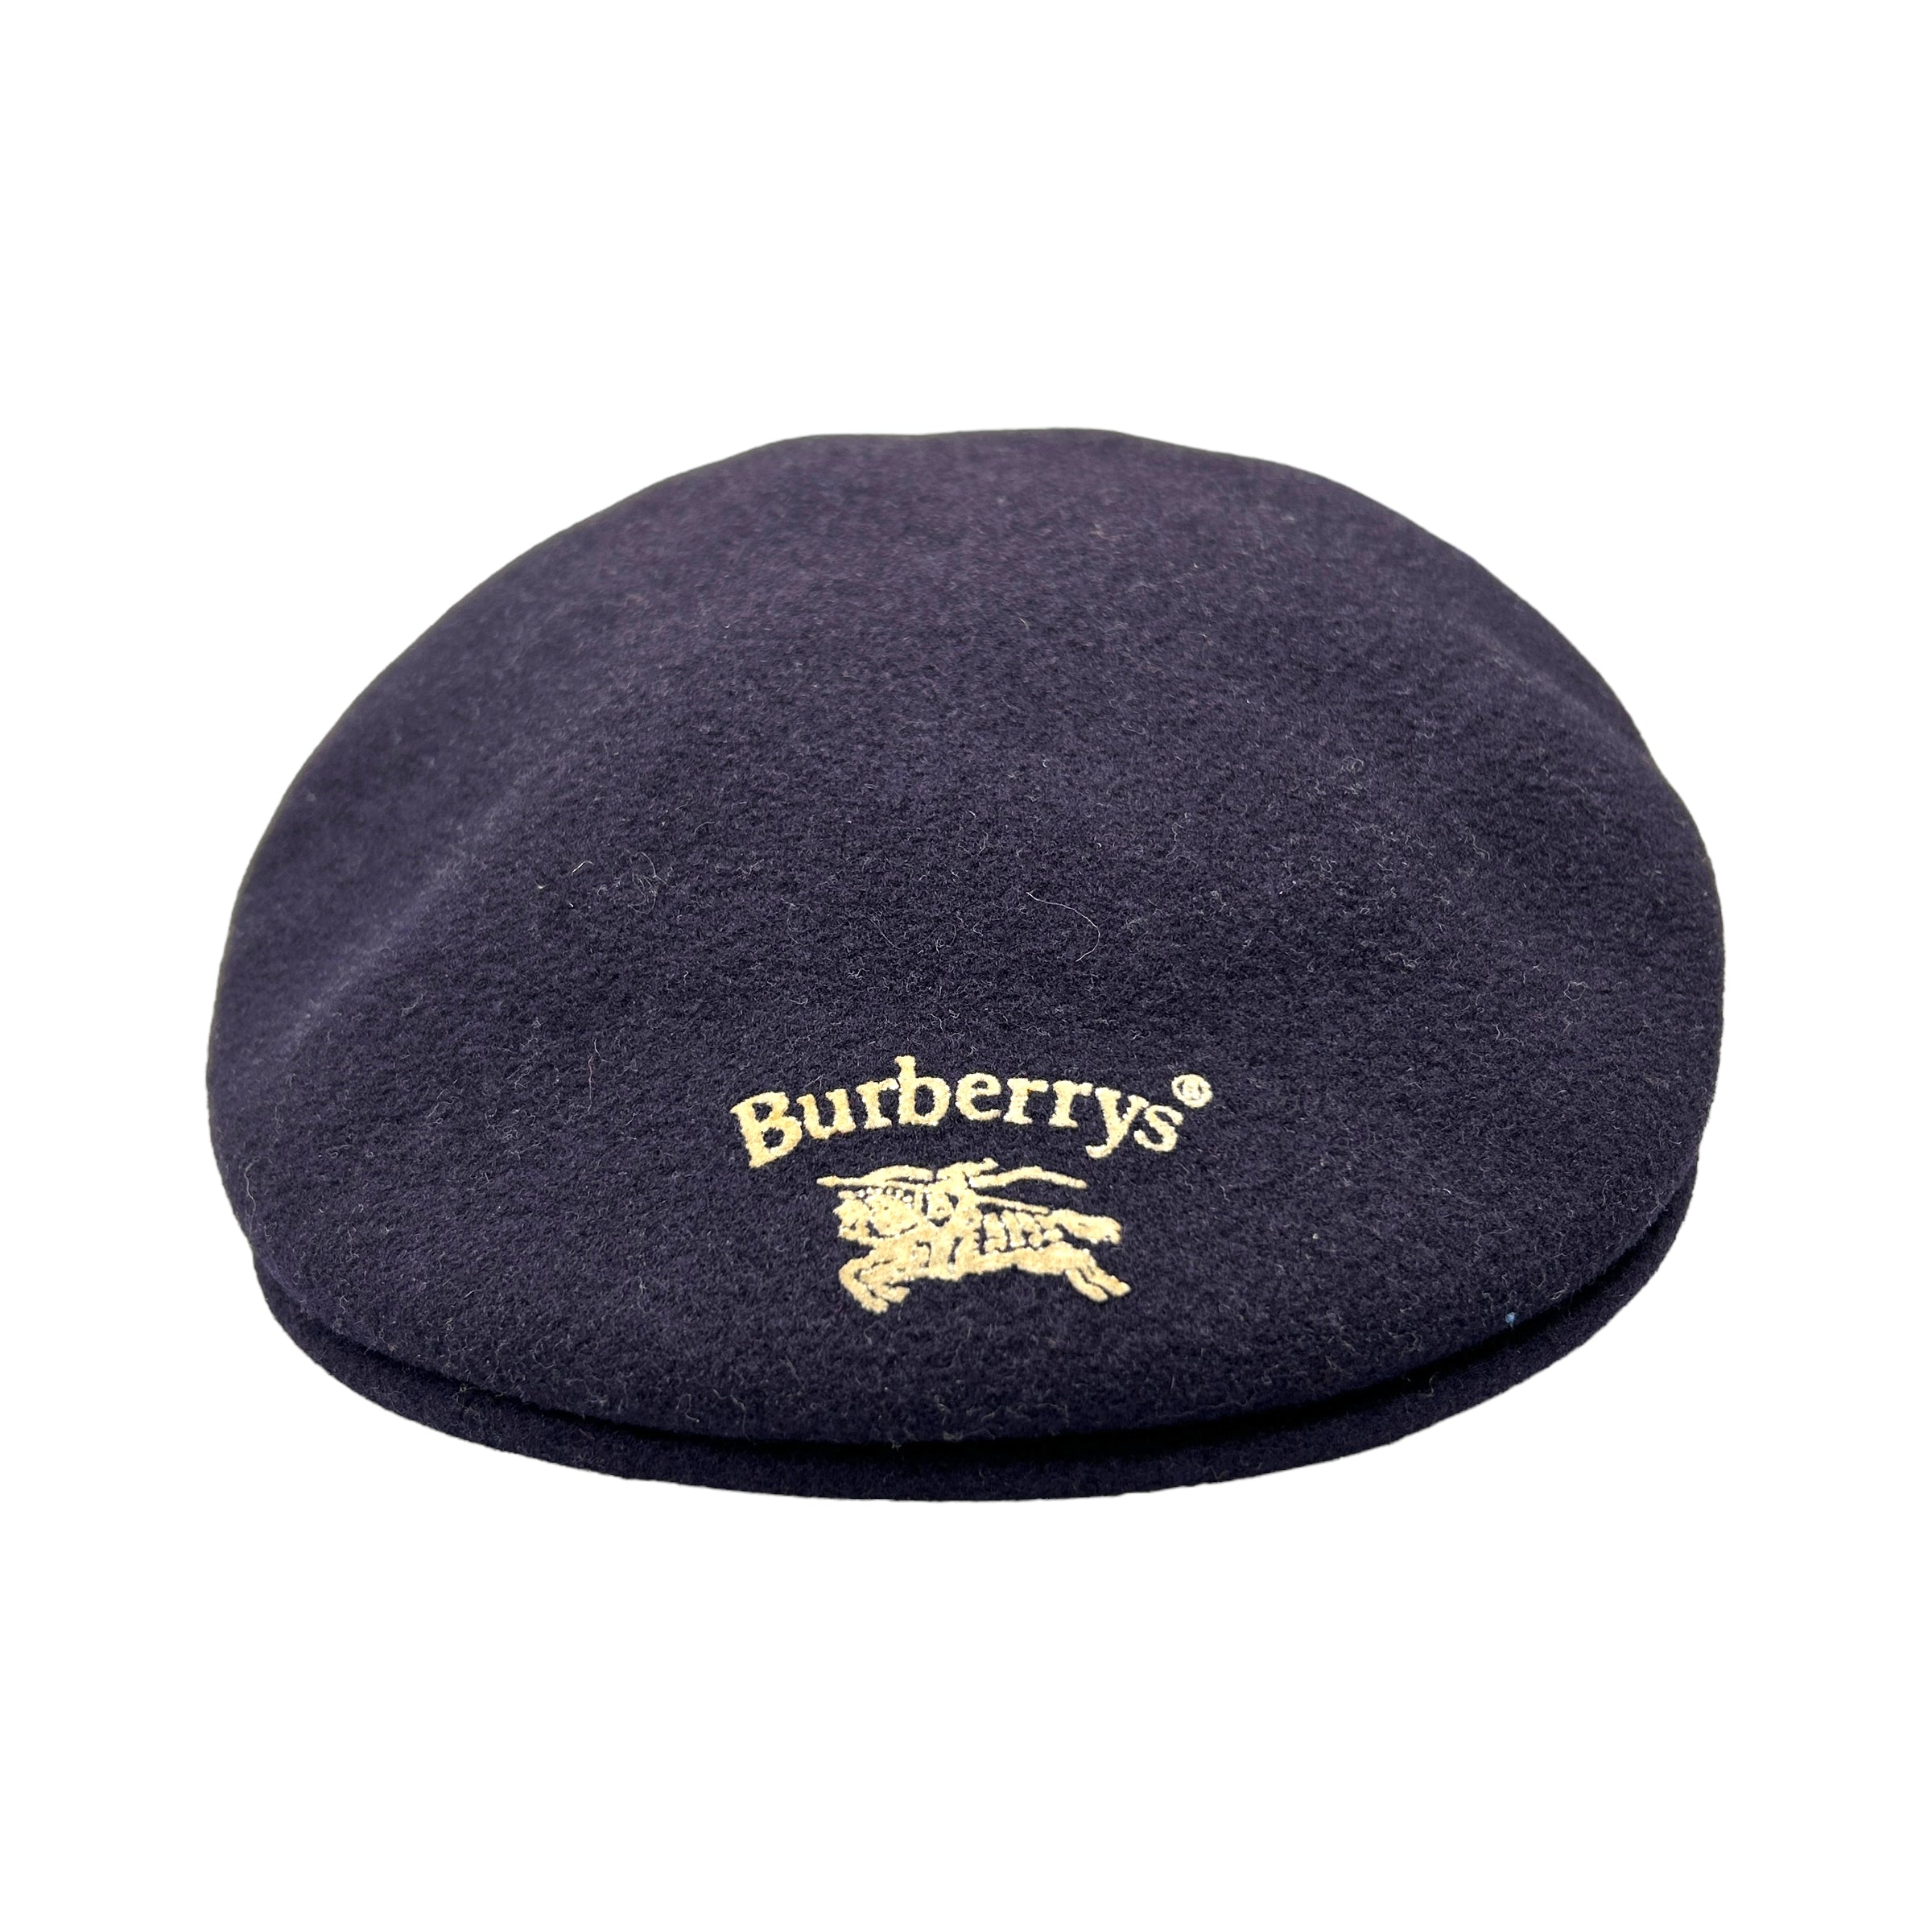 BURBERRY NAVY FLAT GOLF CAP HUNTING HAT